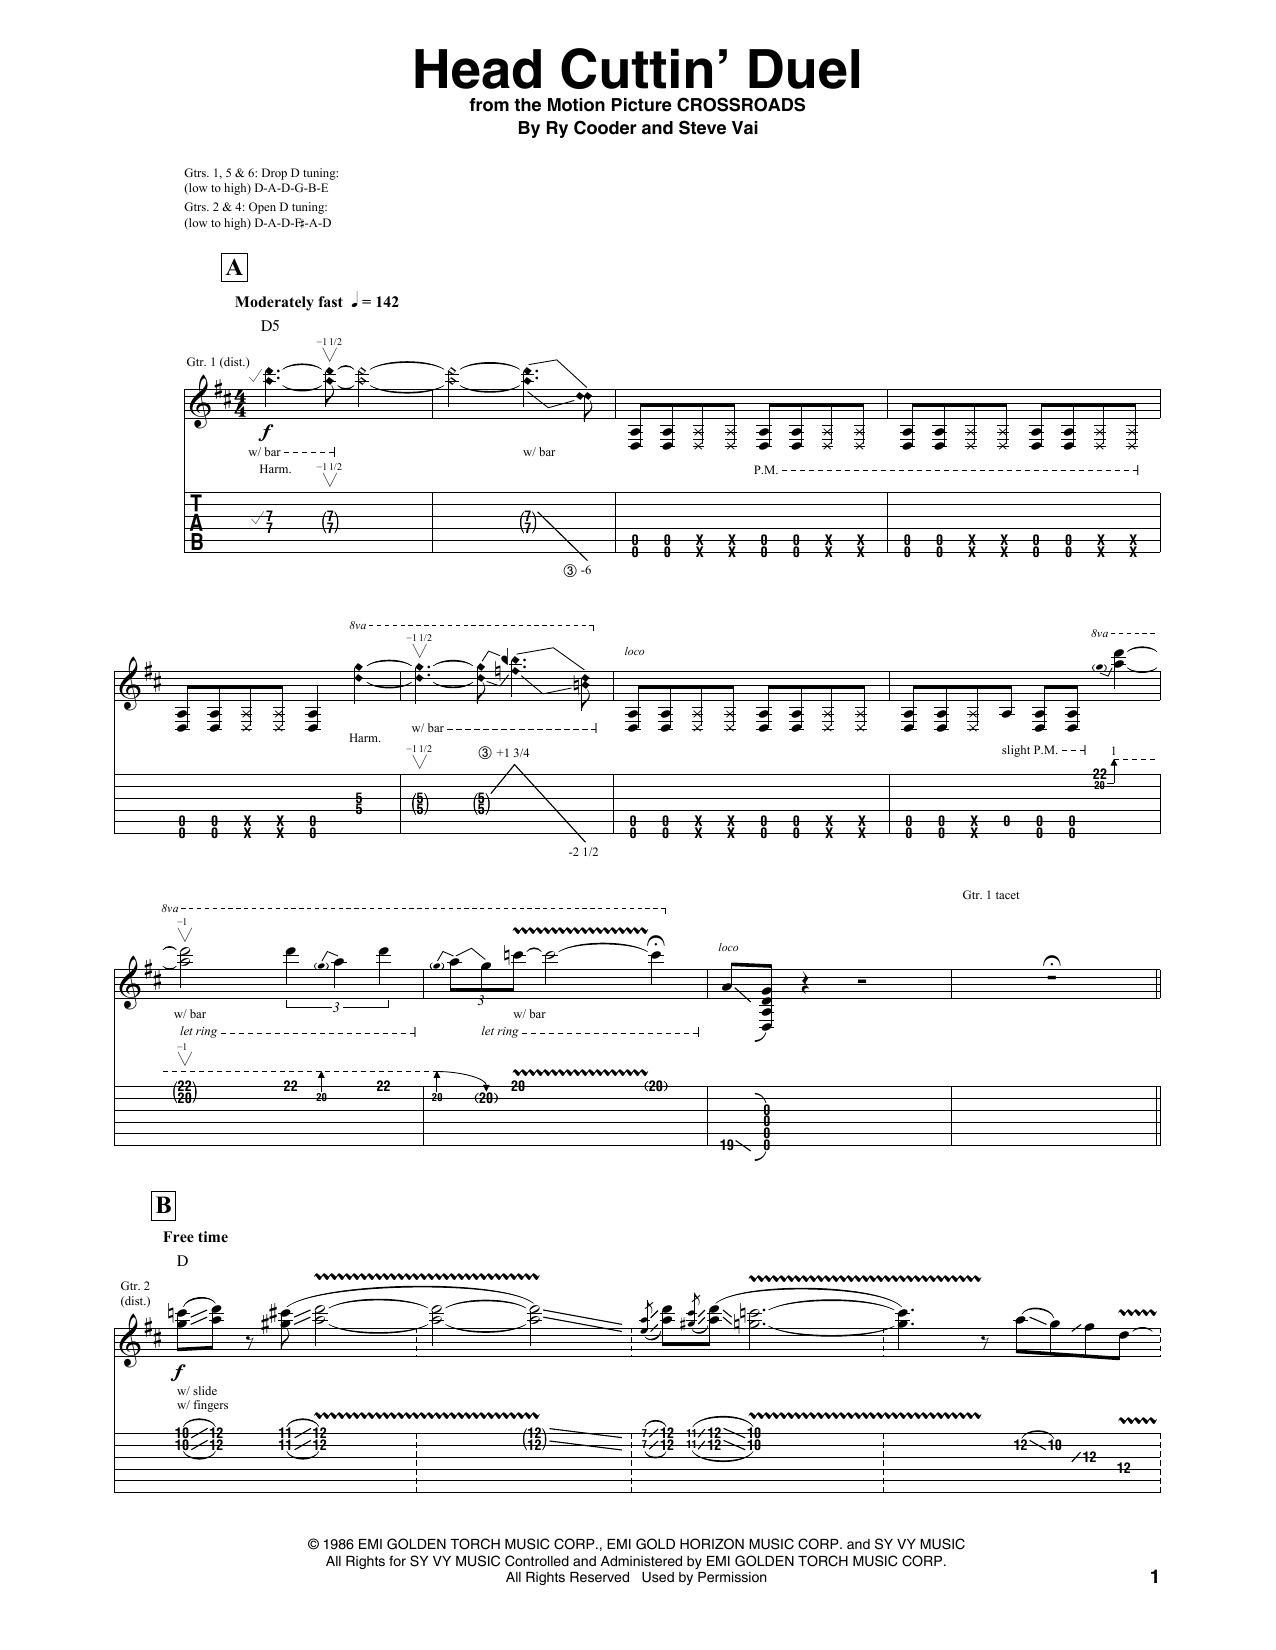 Steve Vai Head Cuttin' Duel Sheet Music Notes & Chords for Guitar Tab - Download or Print PDF